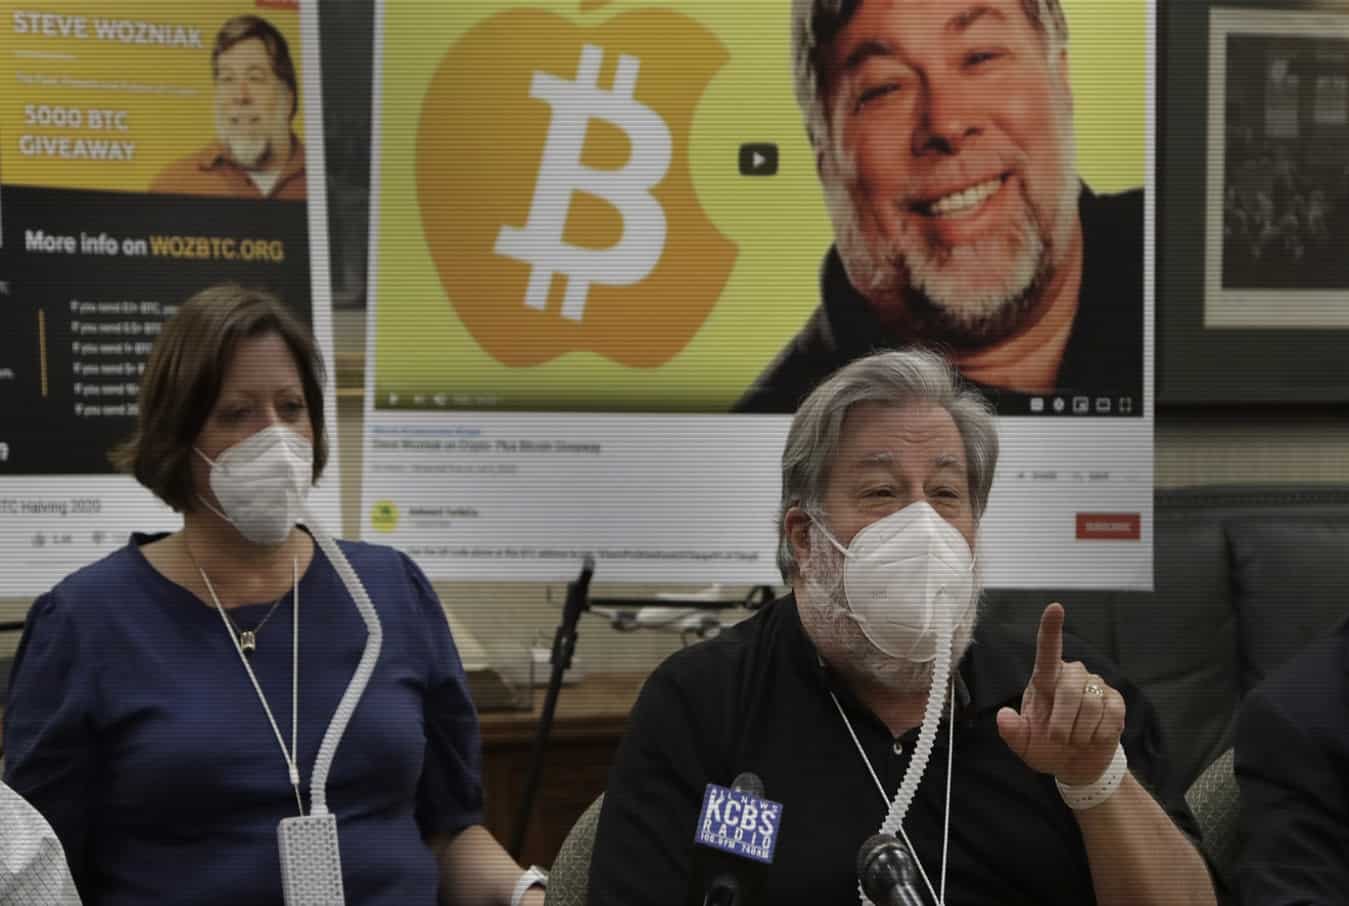 Apple co-founder Steve Wozniak sues YouTube over Bitcoin scams on his name